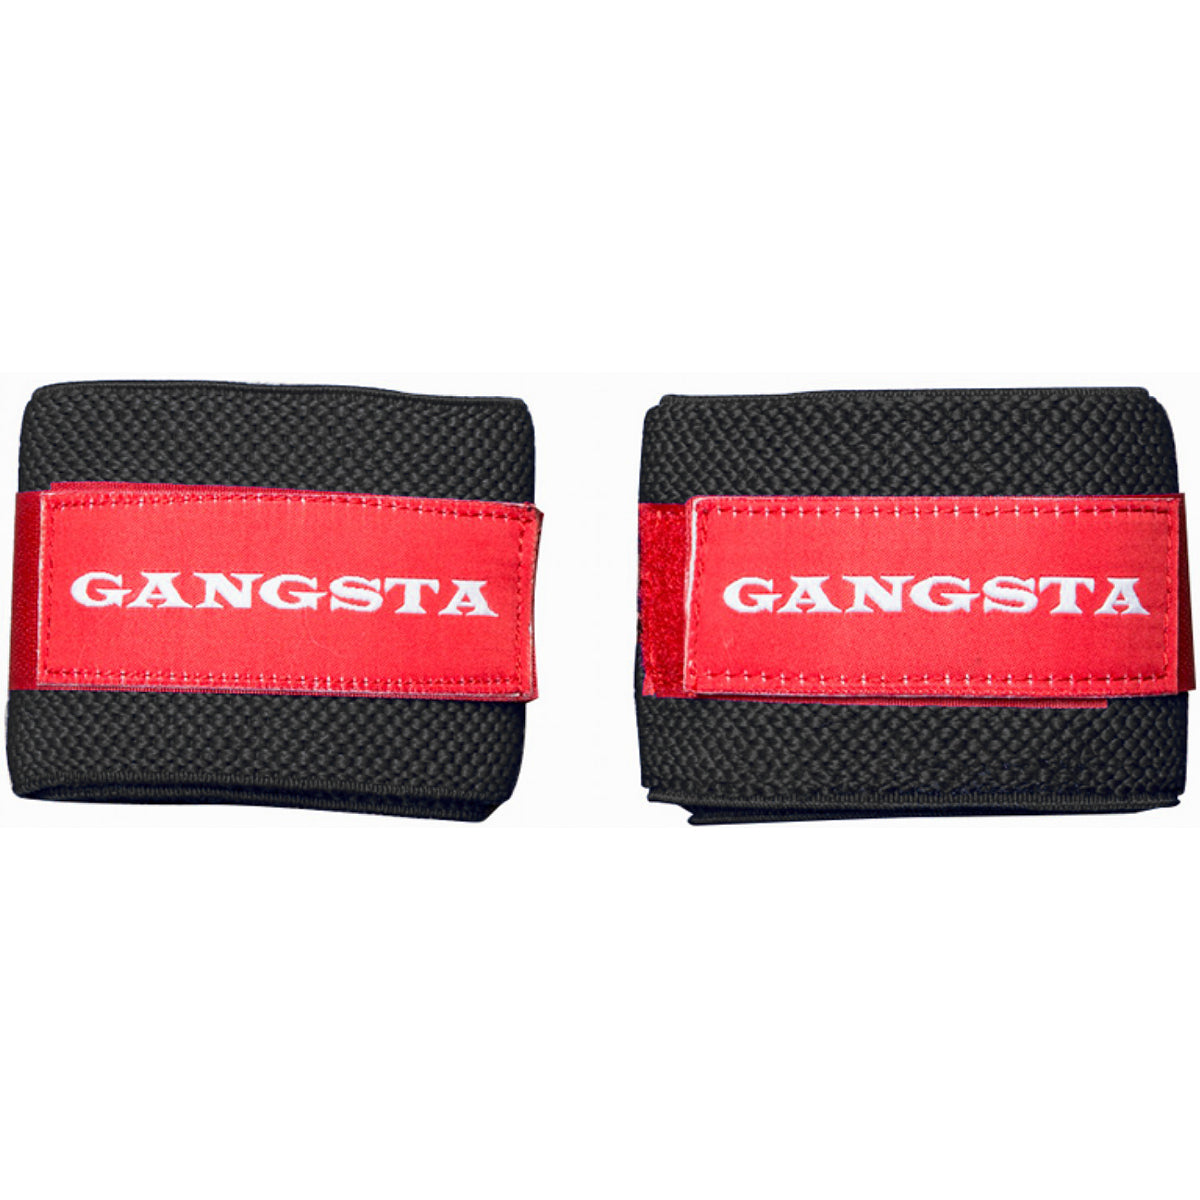 Sling Shot Gangsta Flex Wraps by Mark Bell - Black/Red Sling Shot